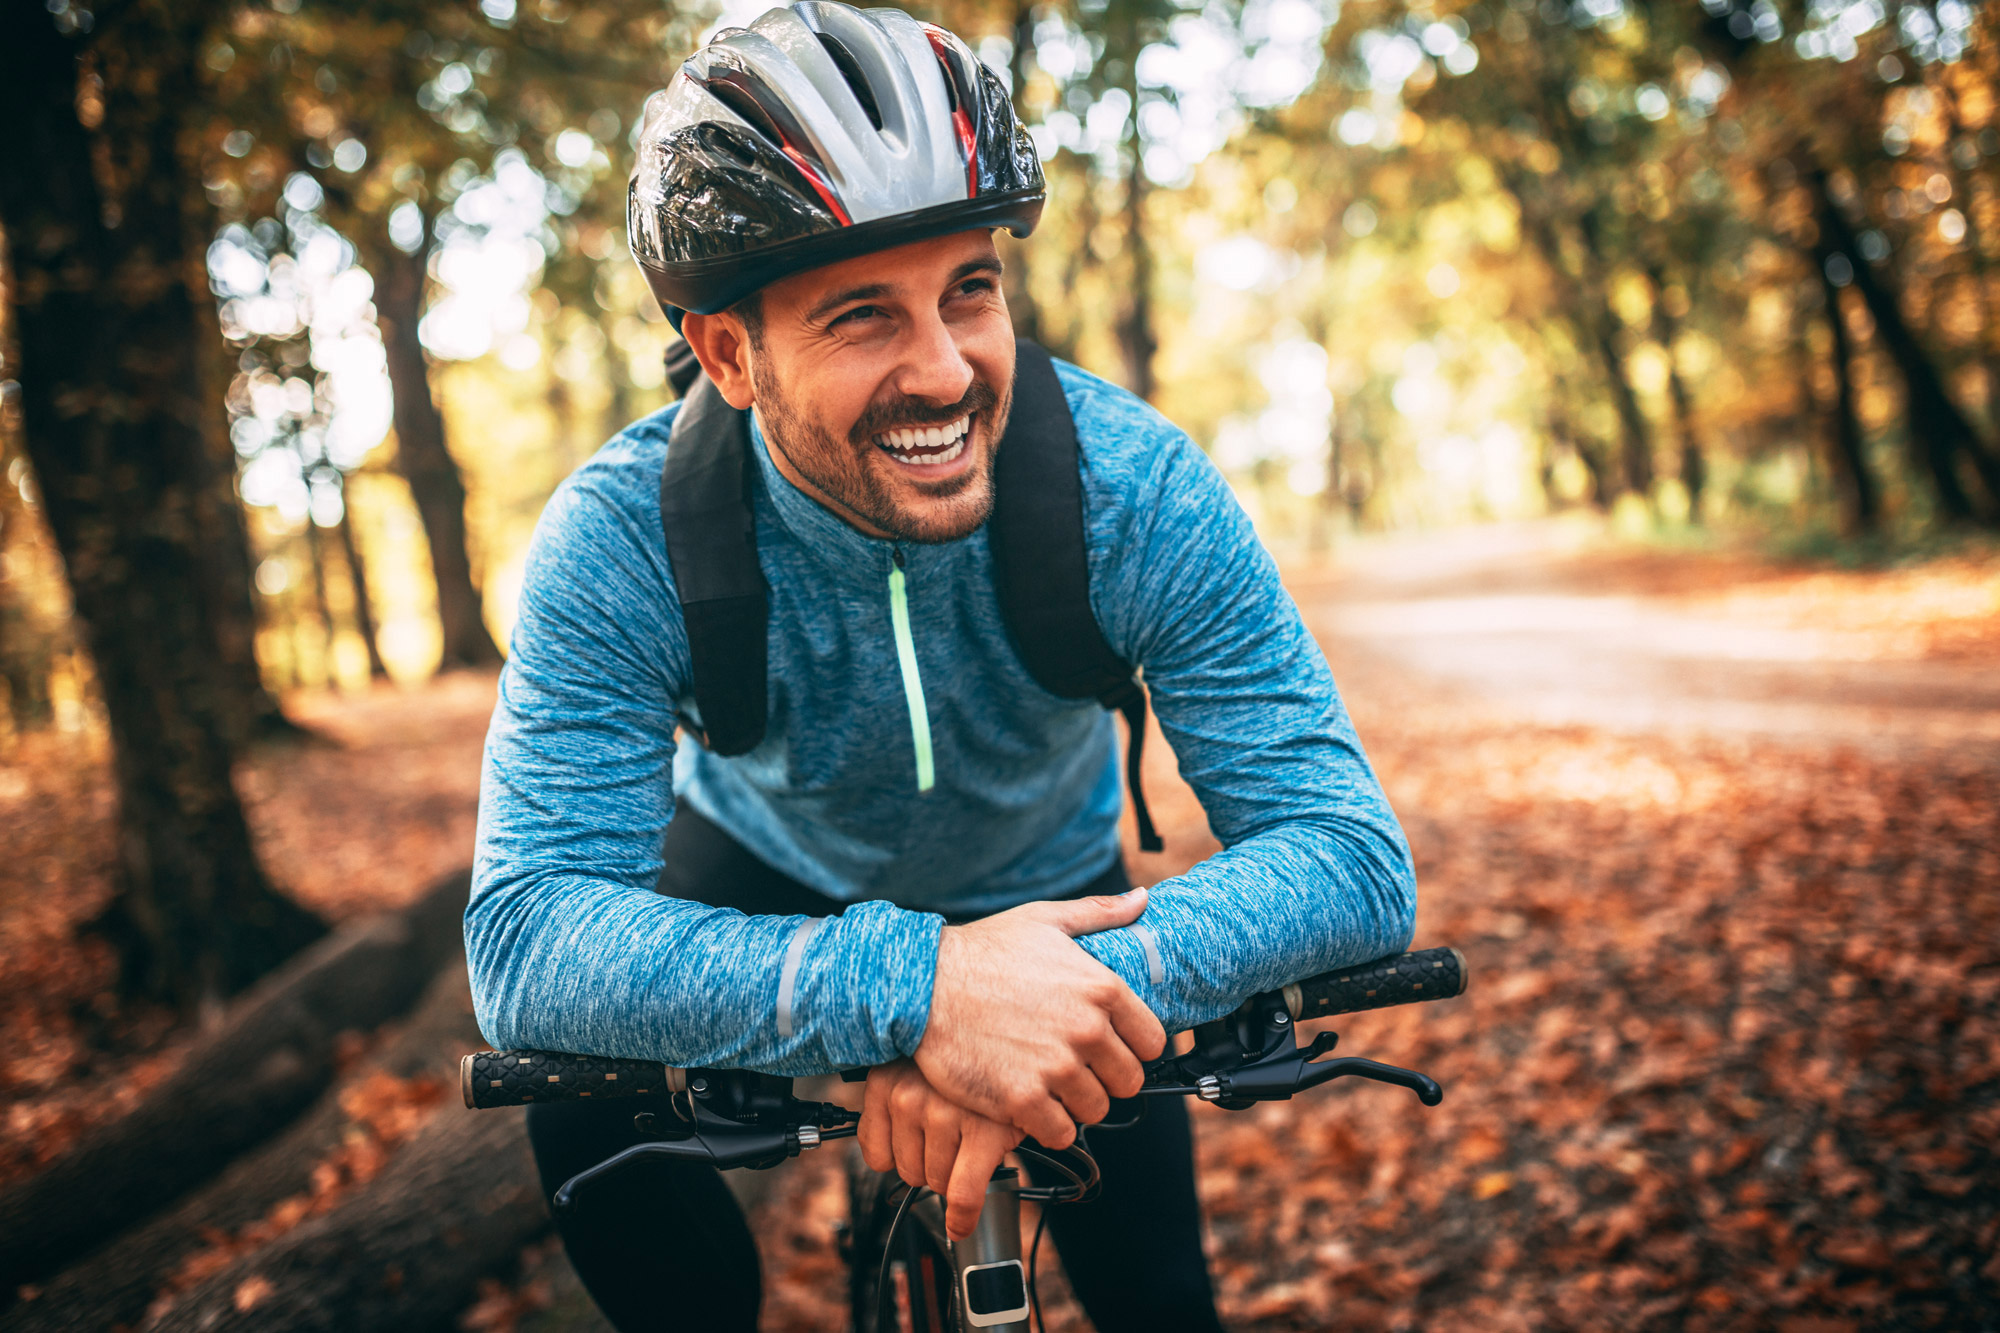 Man Riding Bicycle with Helmet, Wearing Seafoam Blue Sweatshirt.